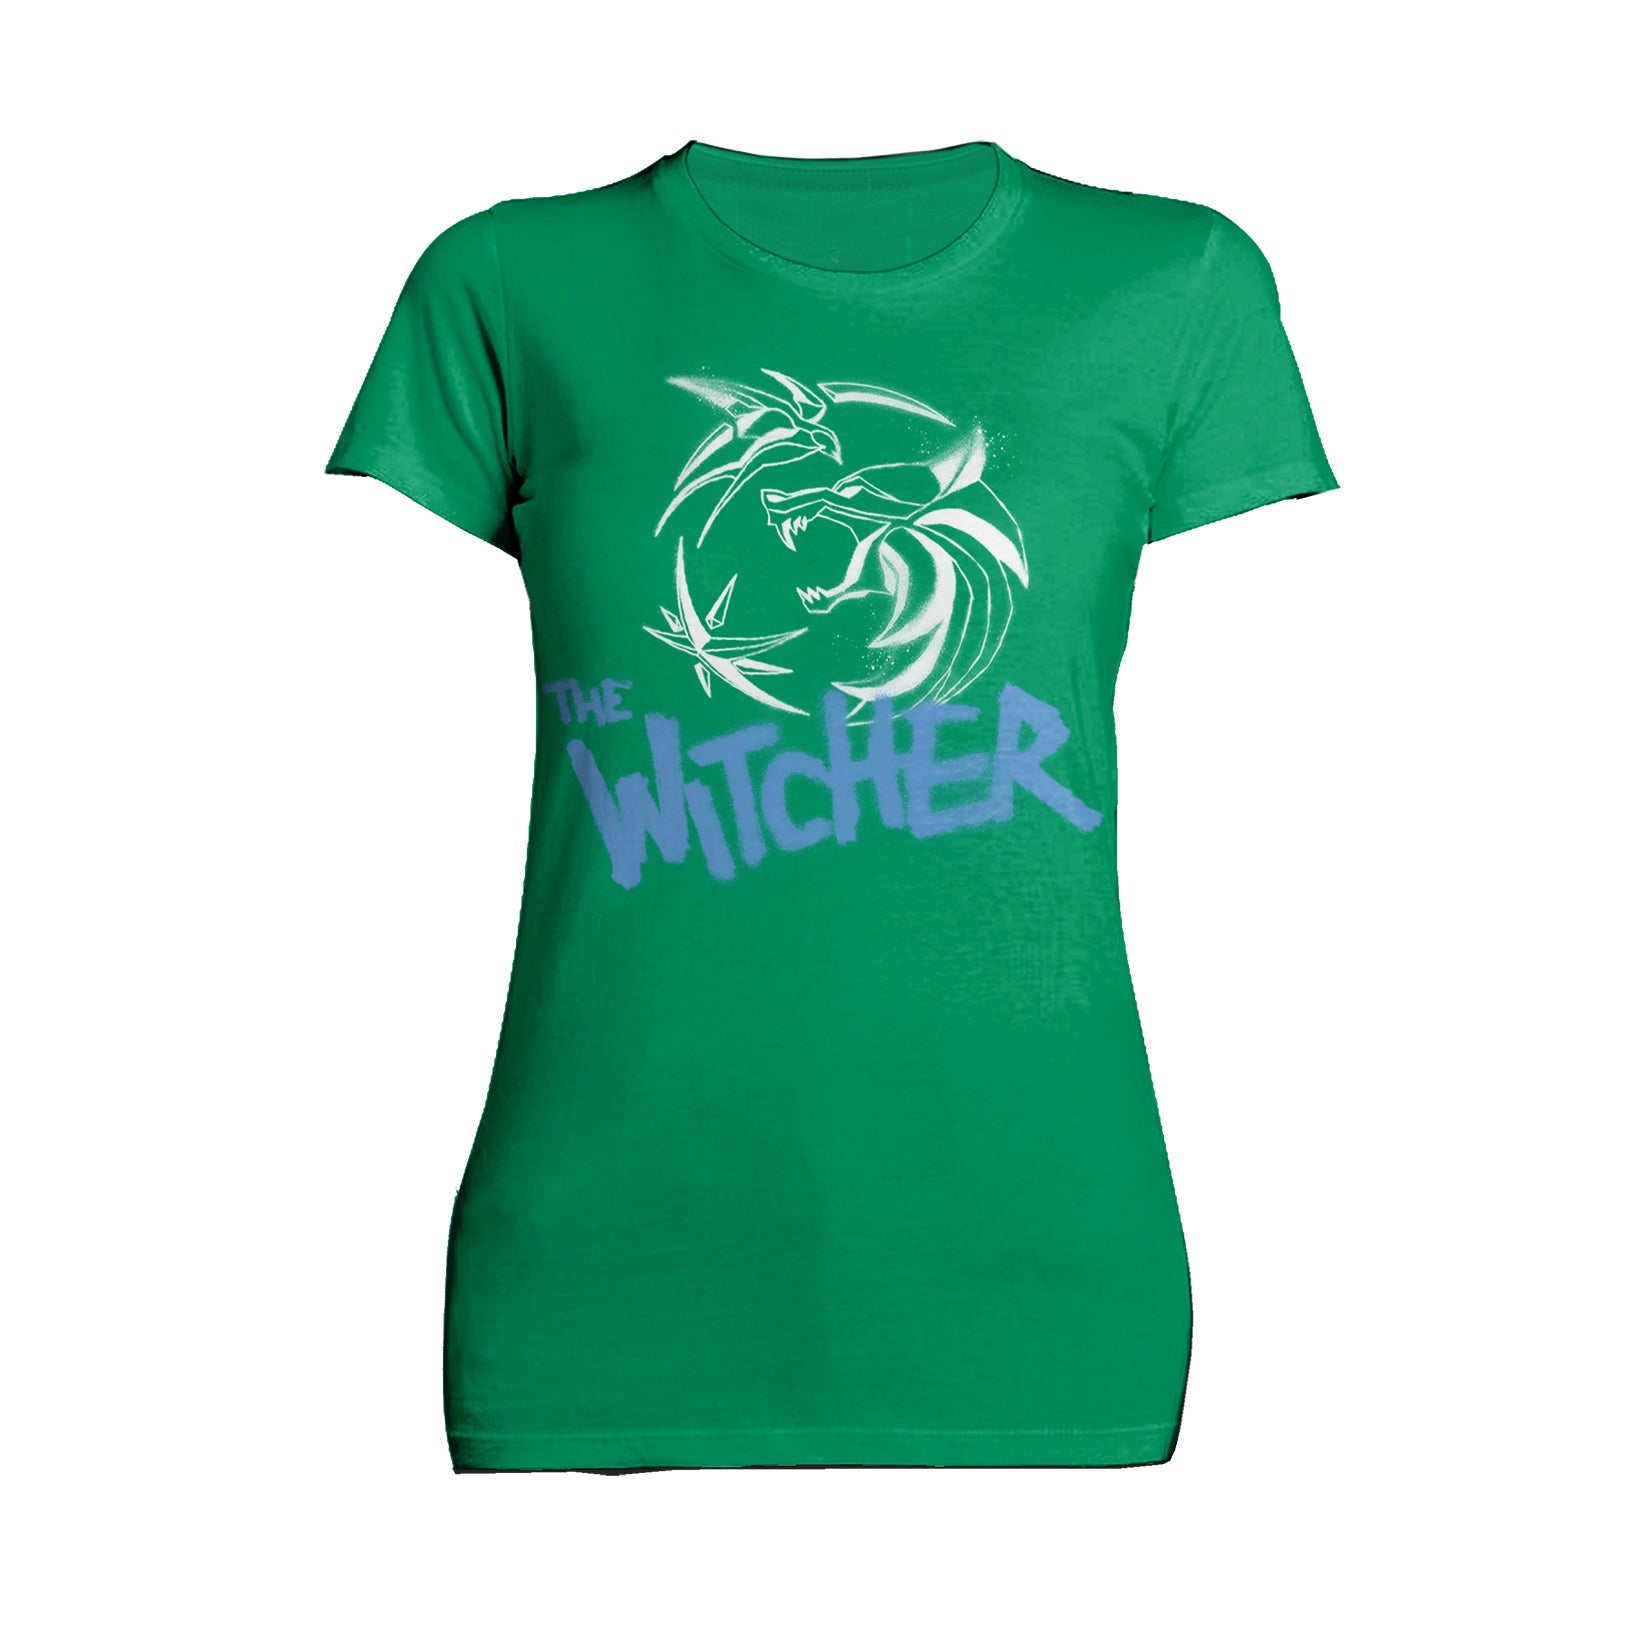 The Witcher Logo Stencil Slayer Official Women's T-Shirt